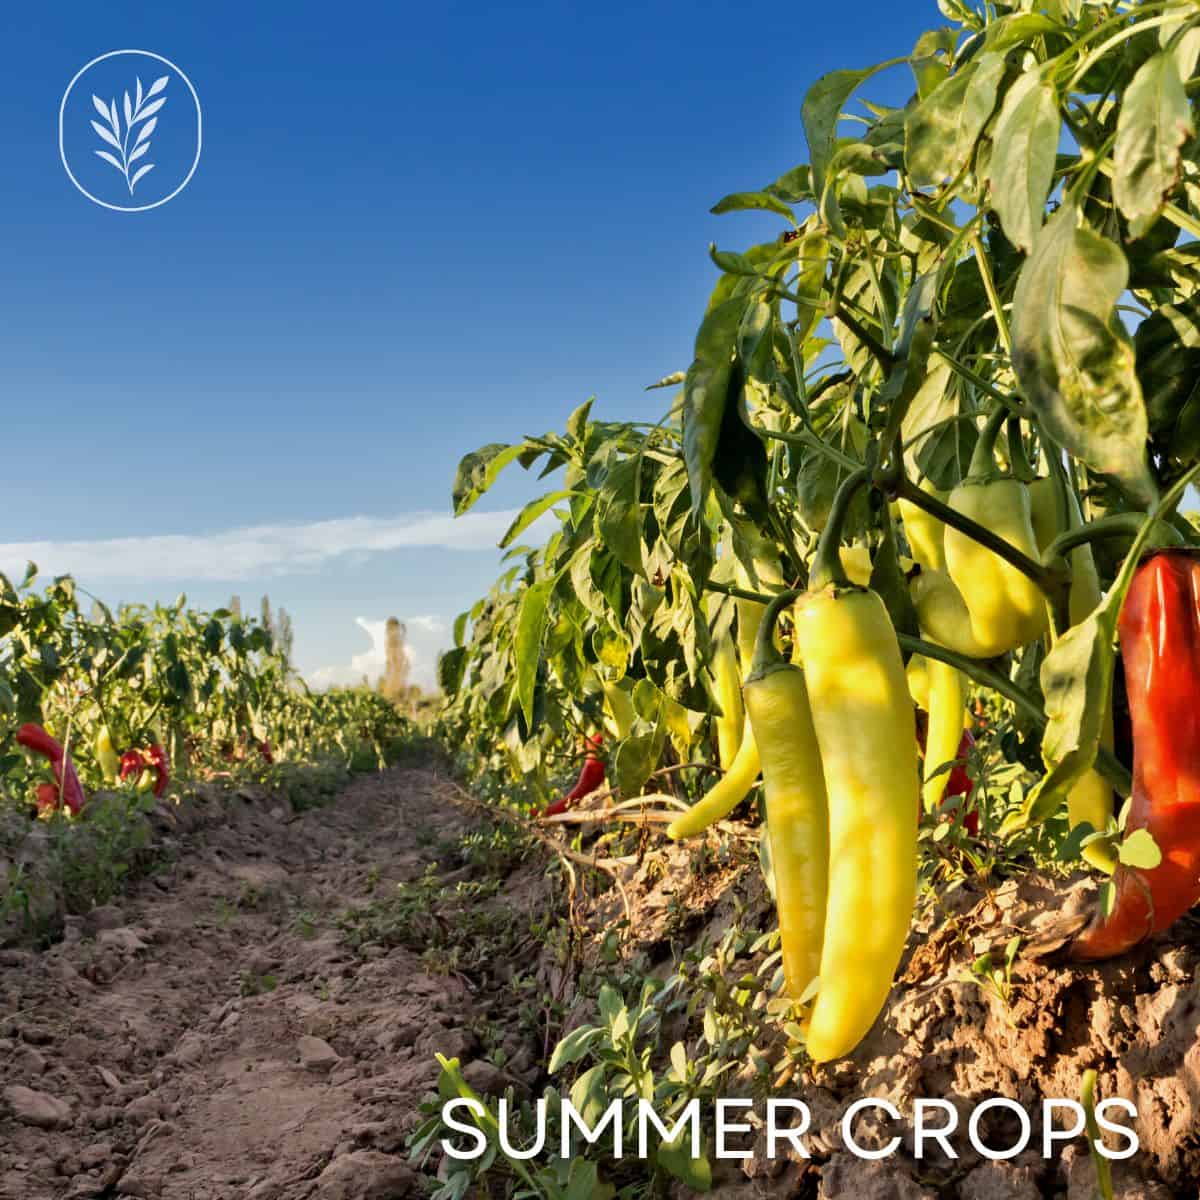 Summer crops via @home4theharvest